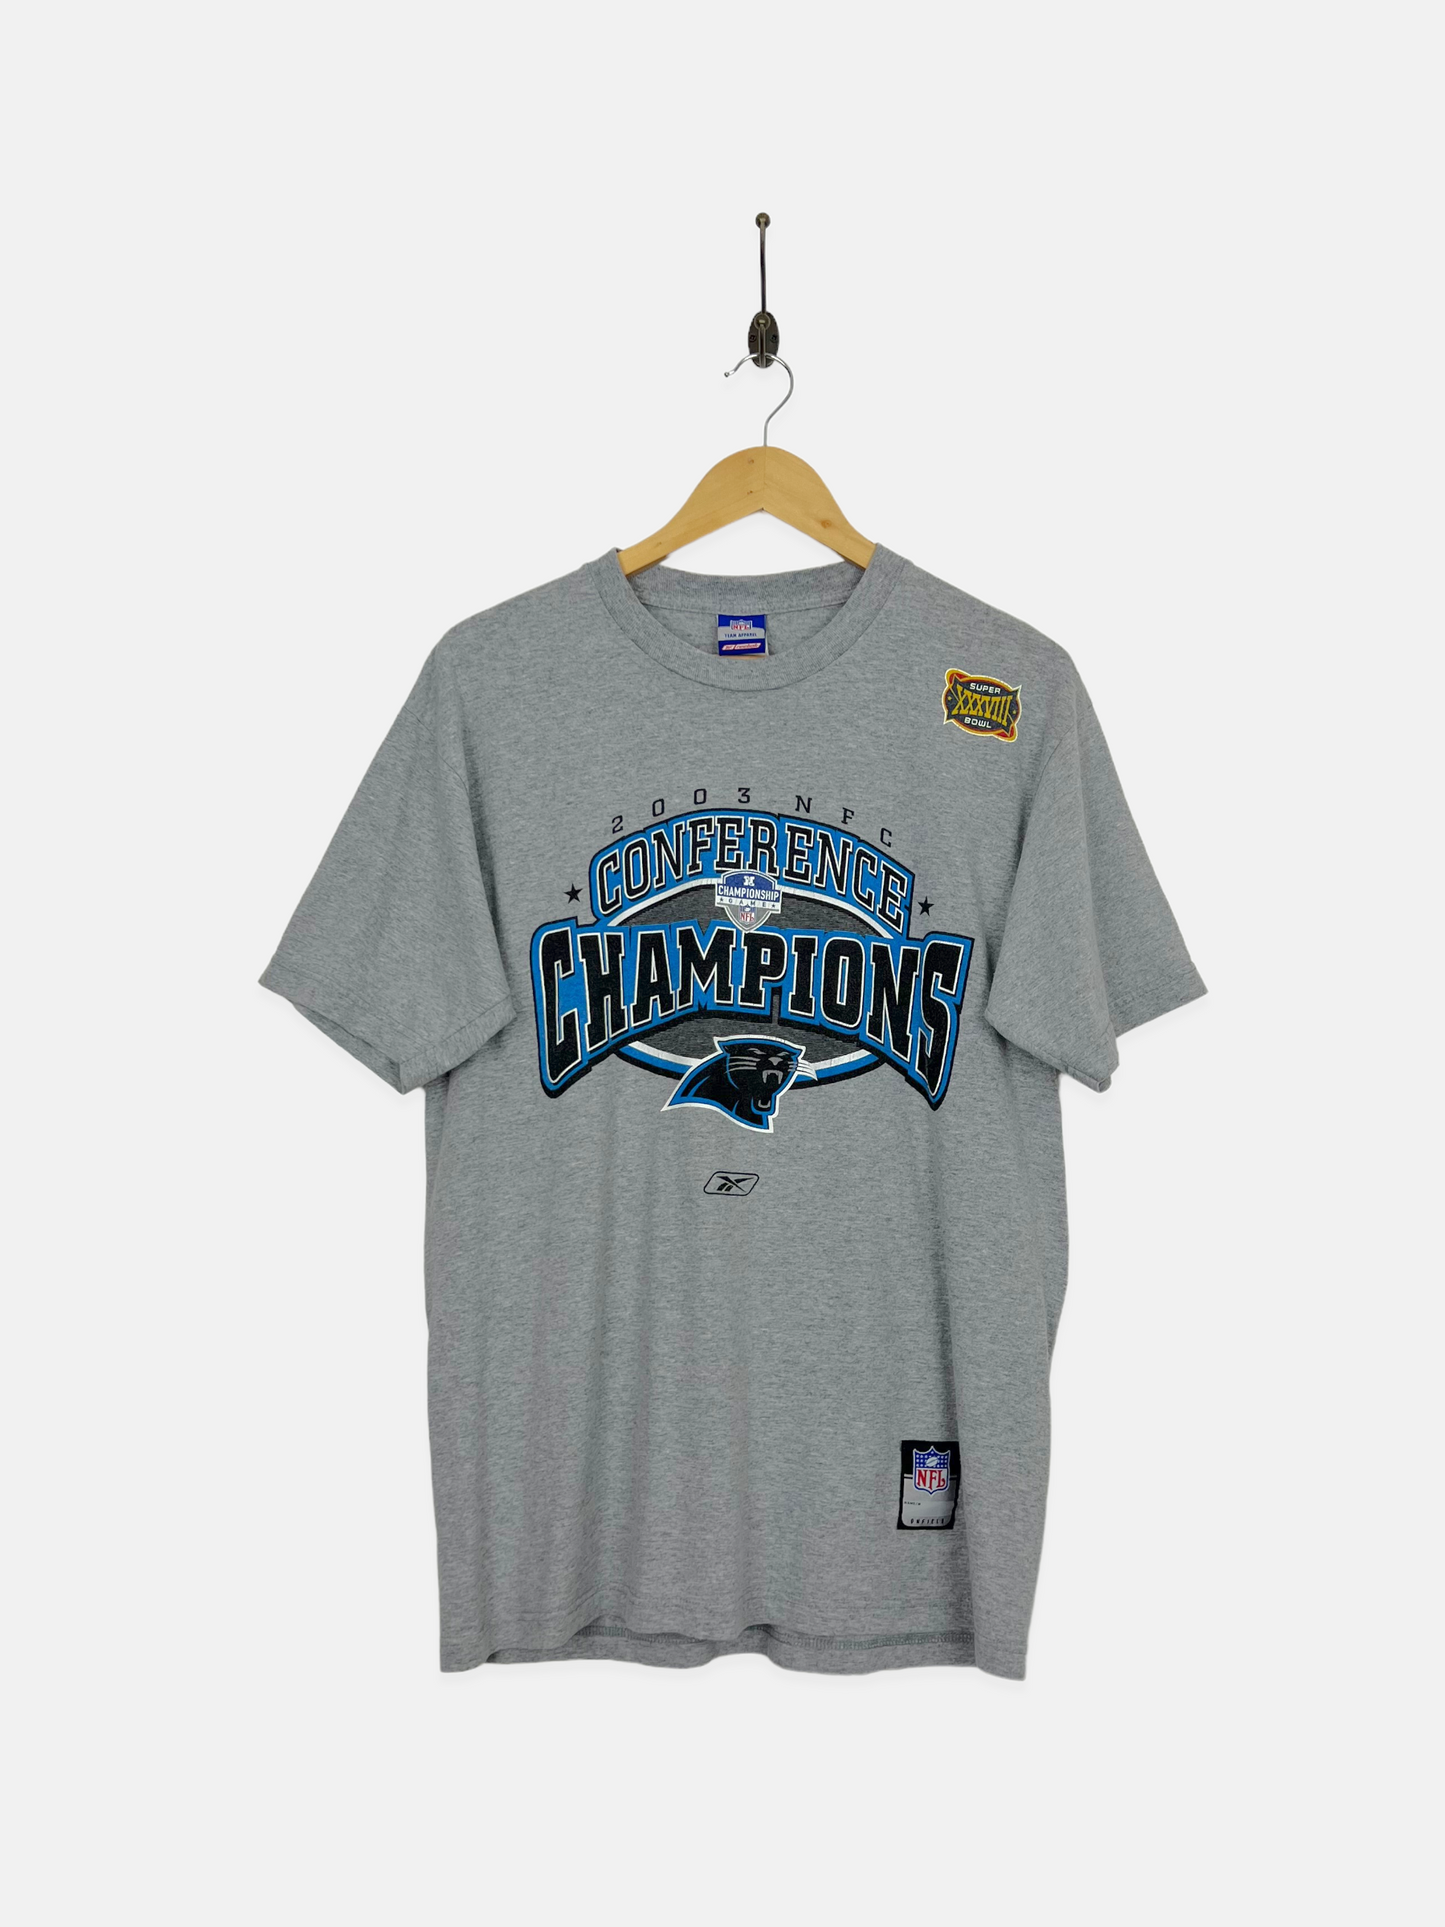 Carolina Panthers NFL Reebok Vintage T-Shirt Size M-L